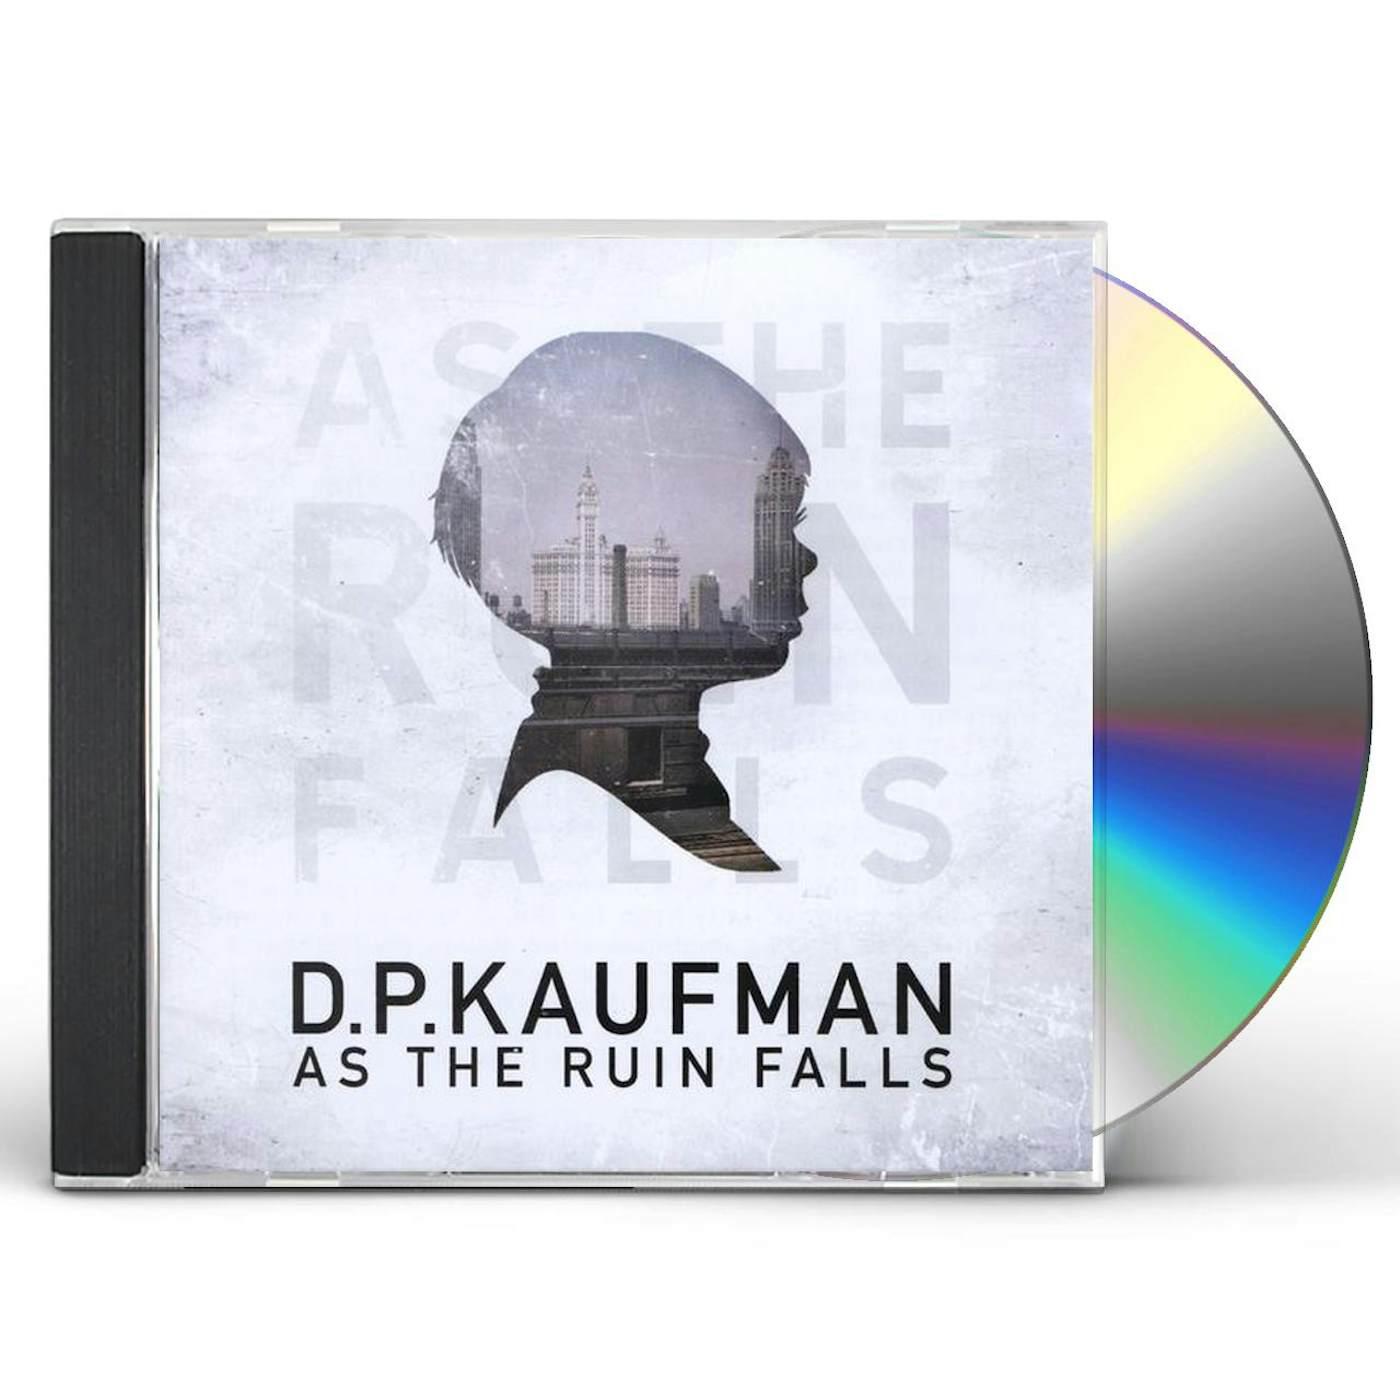 D.P.Kaufman AS THE RUIN FALLS CD